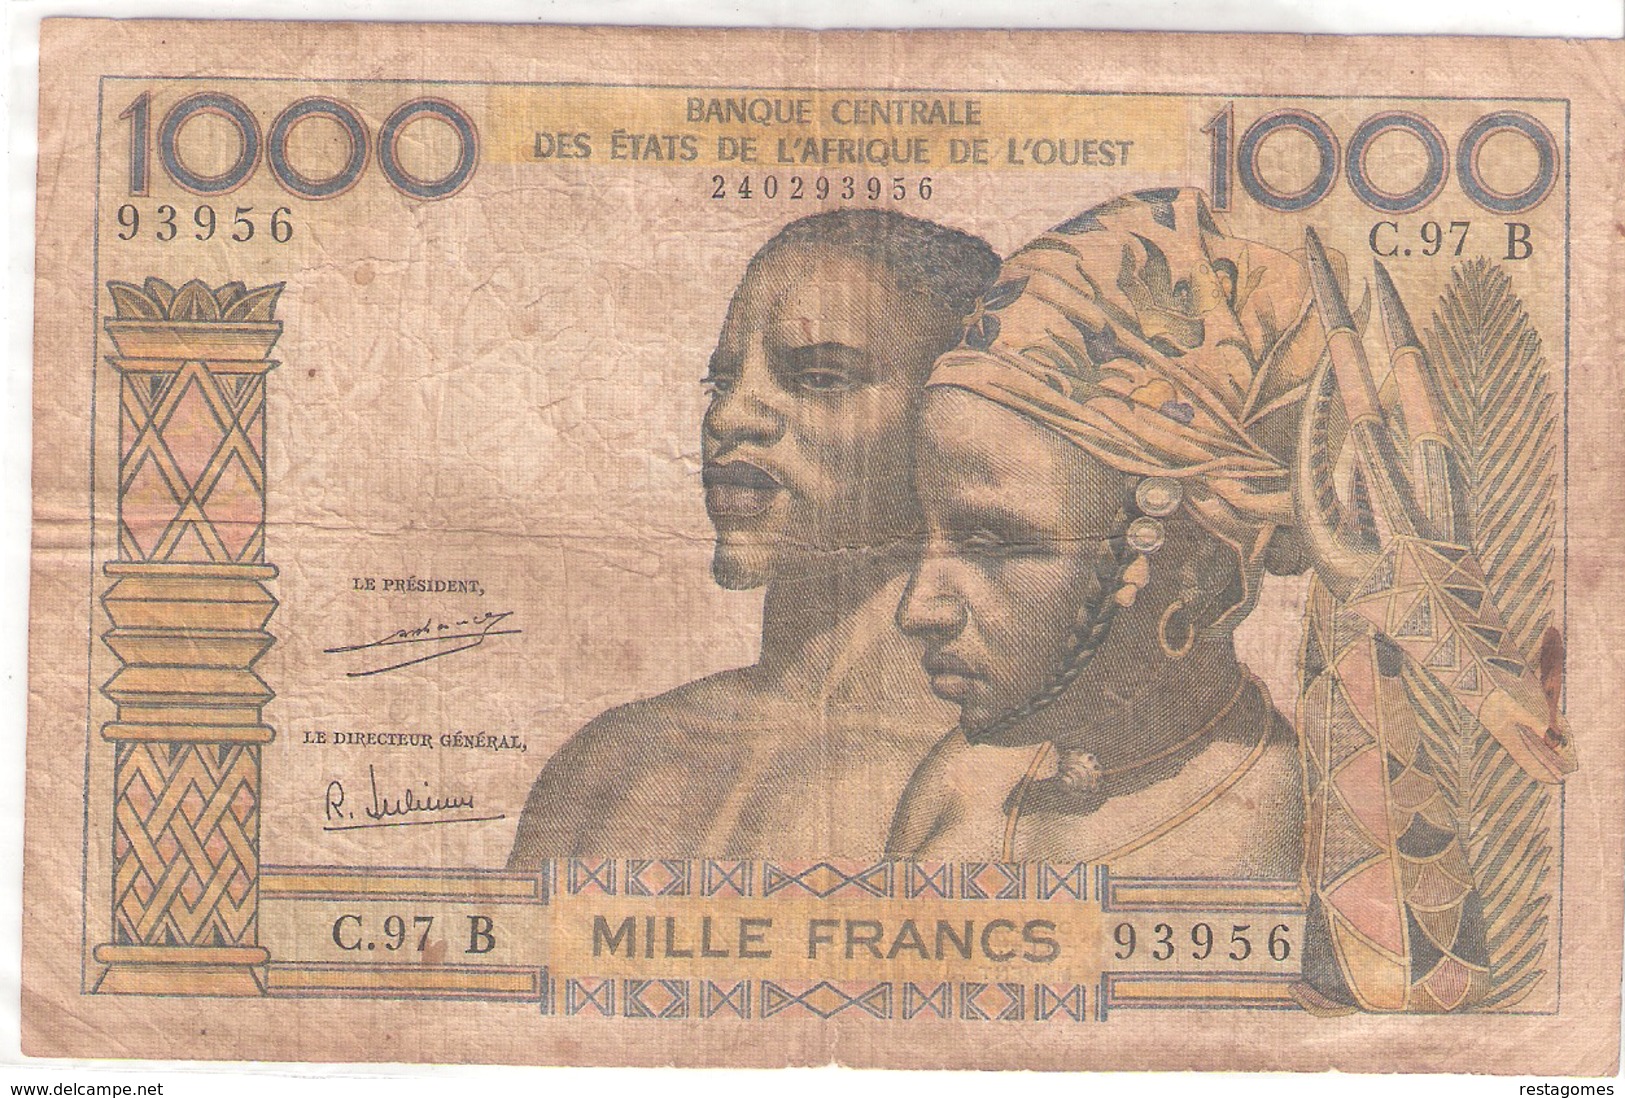 1000-FRANCS-BANQUE-CENTRALE - Estados De Africa Occidental